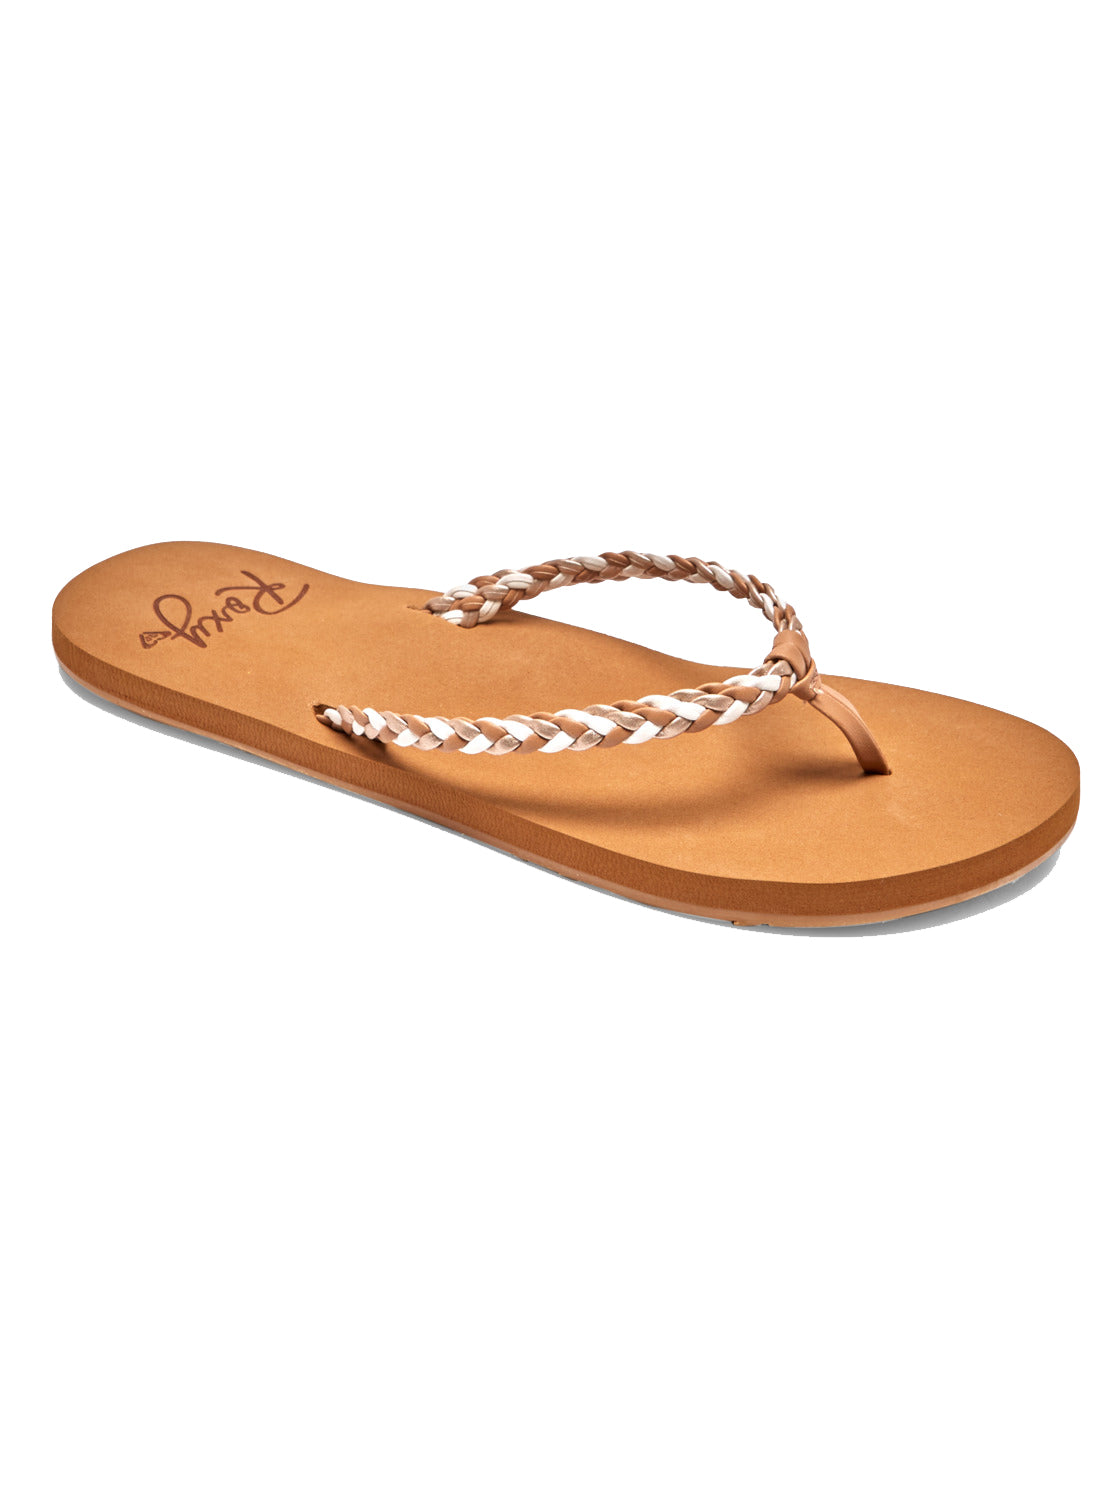 Roxy Costas Womens Sandal TG1-Tan-Gold 8